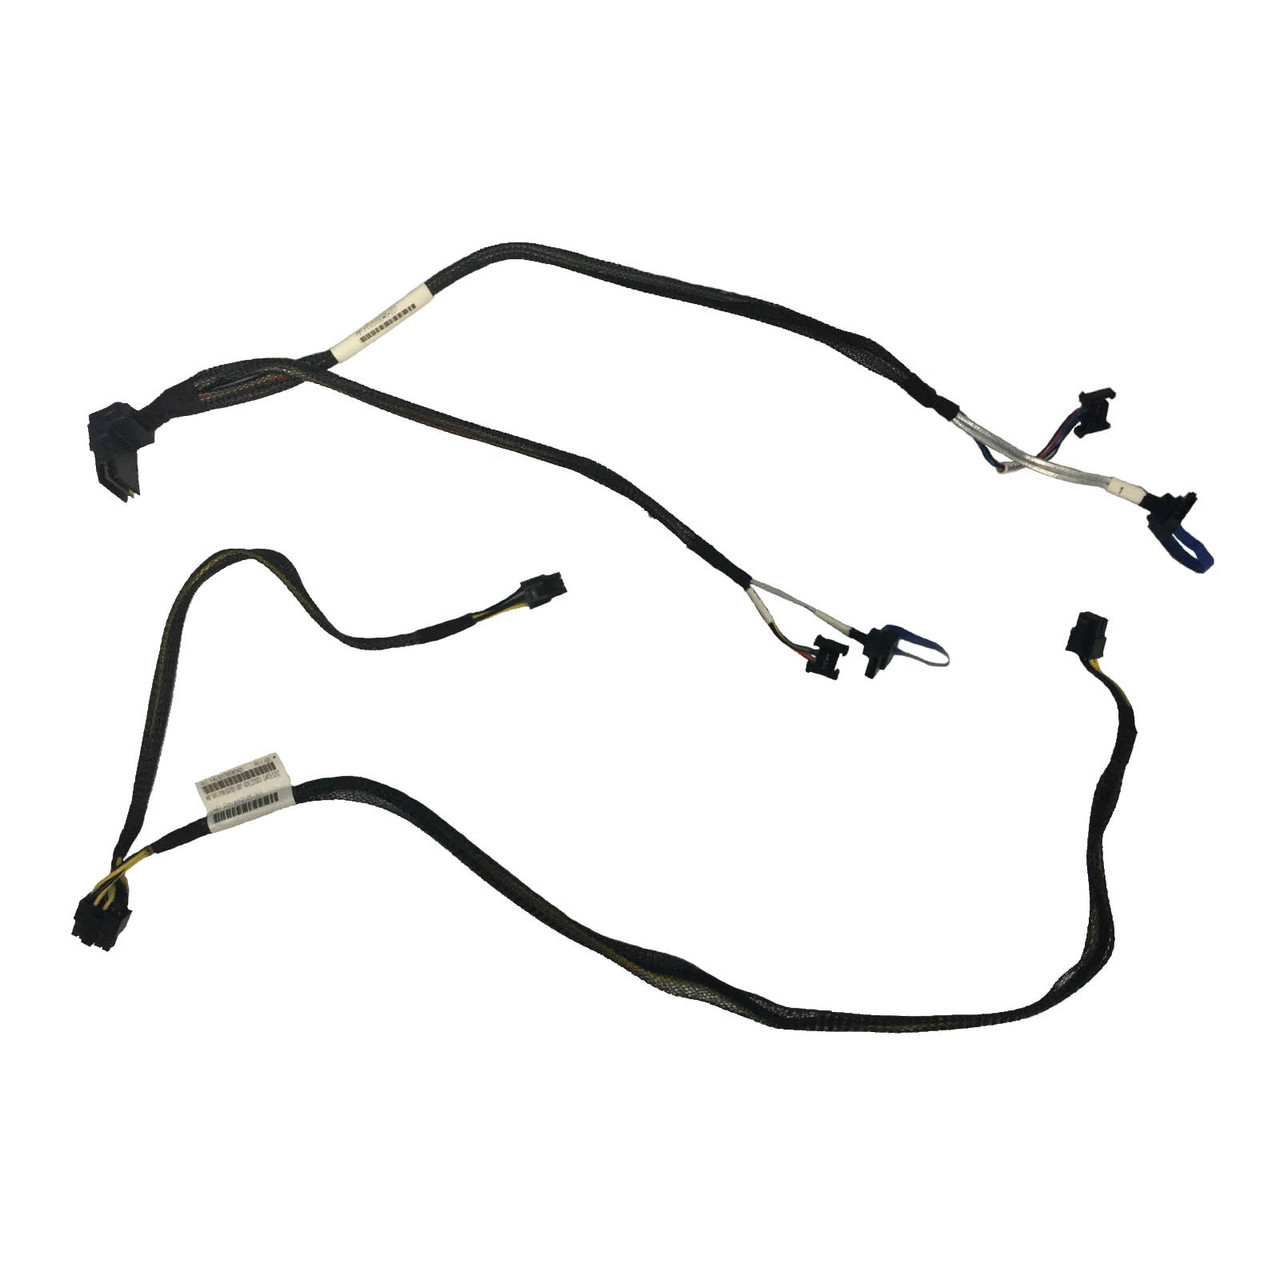 HP 697851-001 BL660C G8 SAS Cable Kit ***NEW***